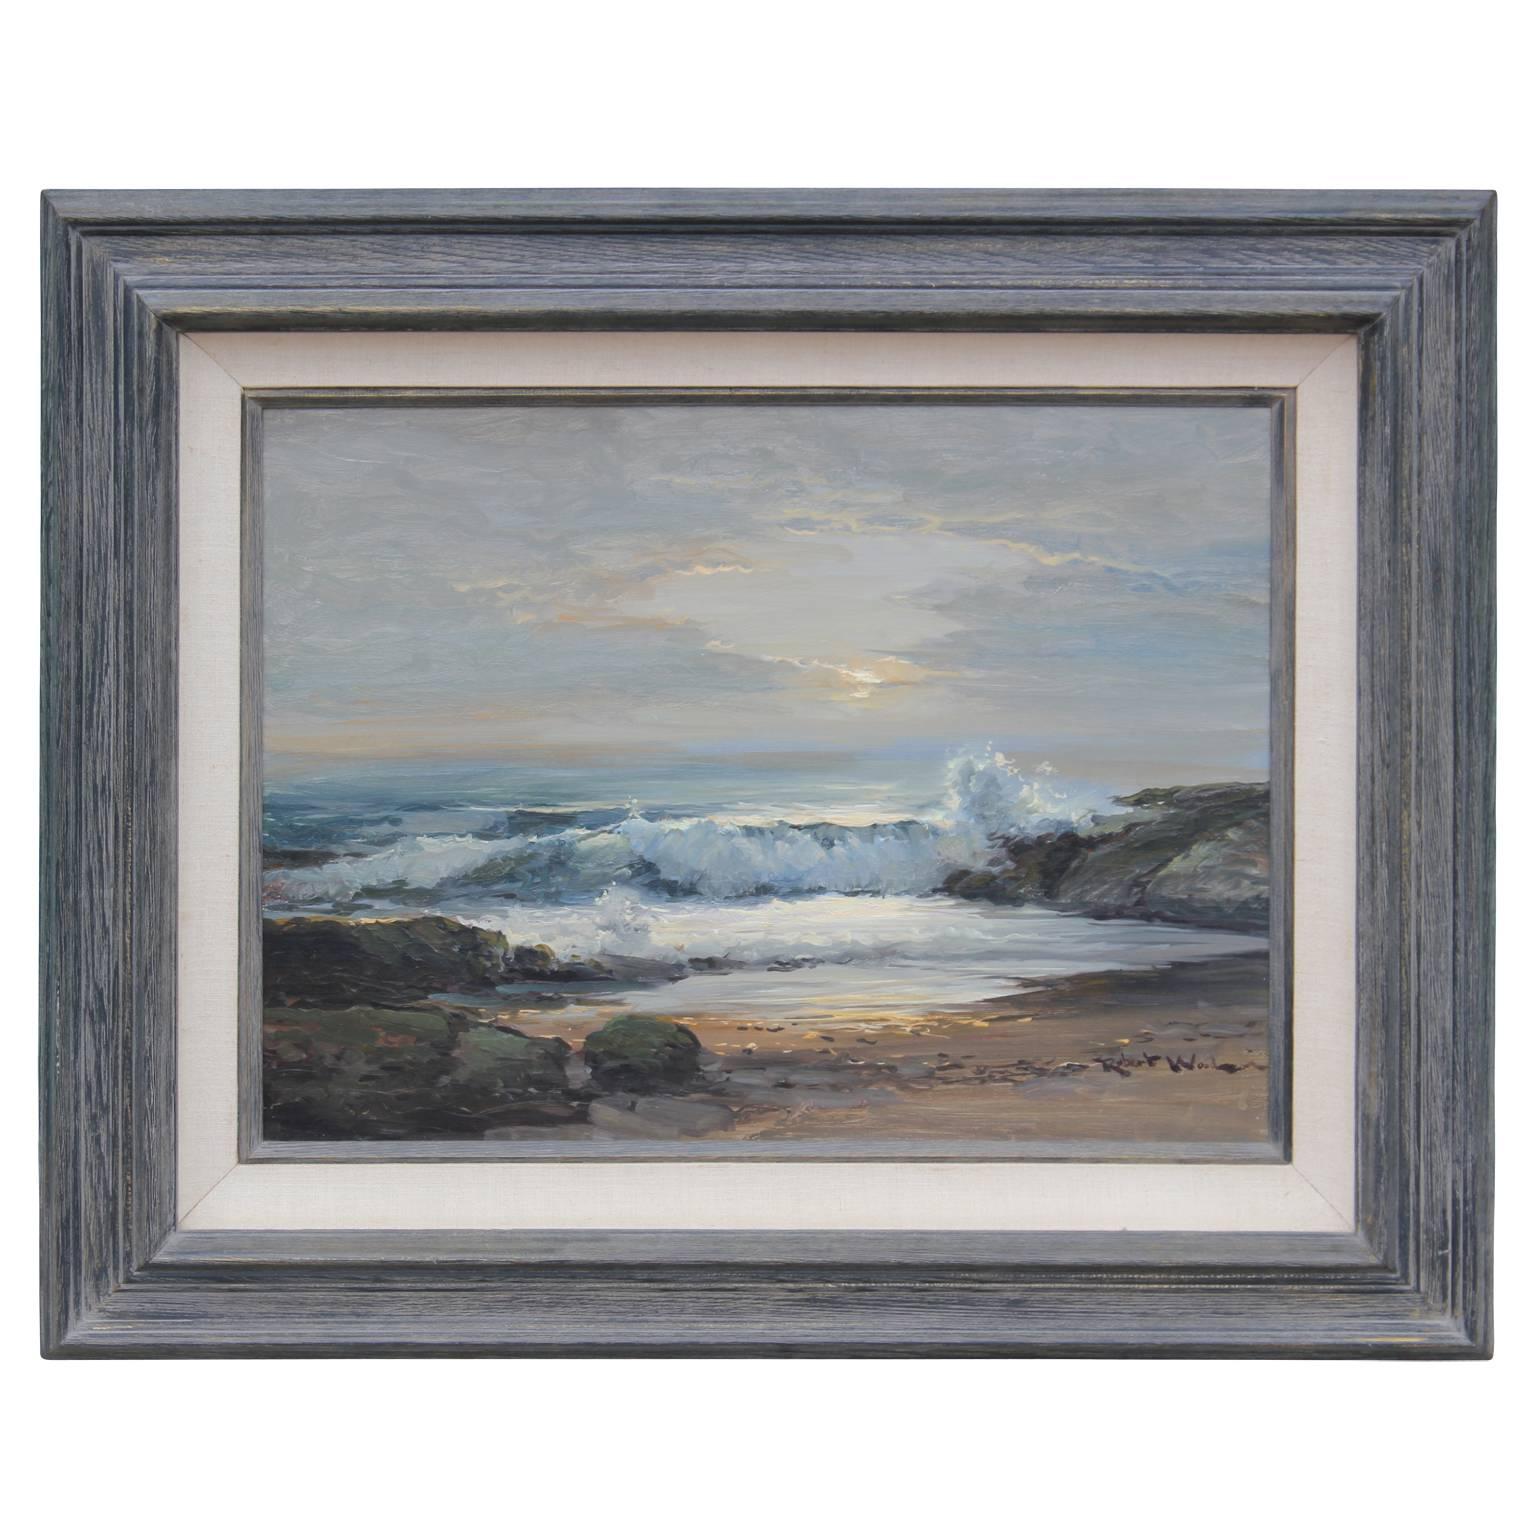 Robert William Wood Landscape Art - "Tides Coming In" Naturalistic Coastal Landscape